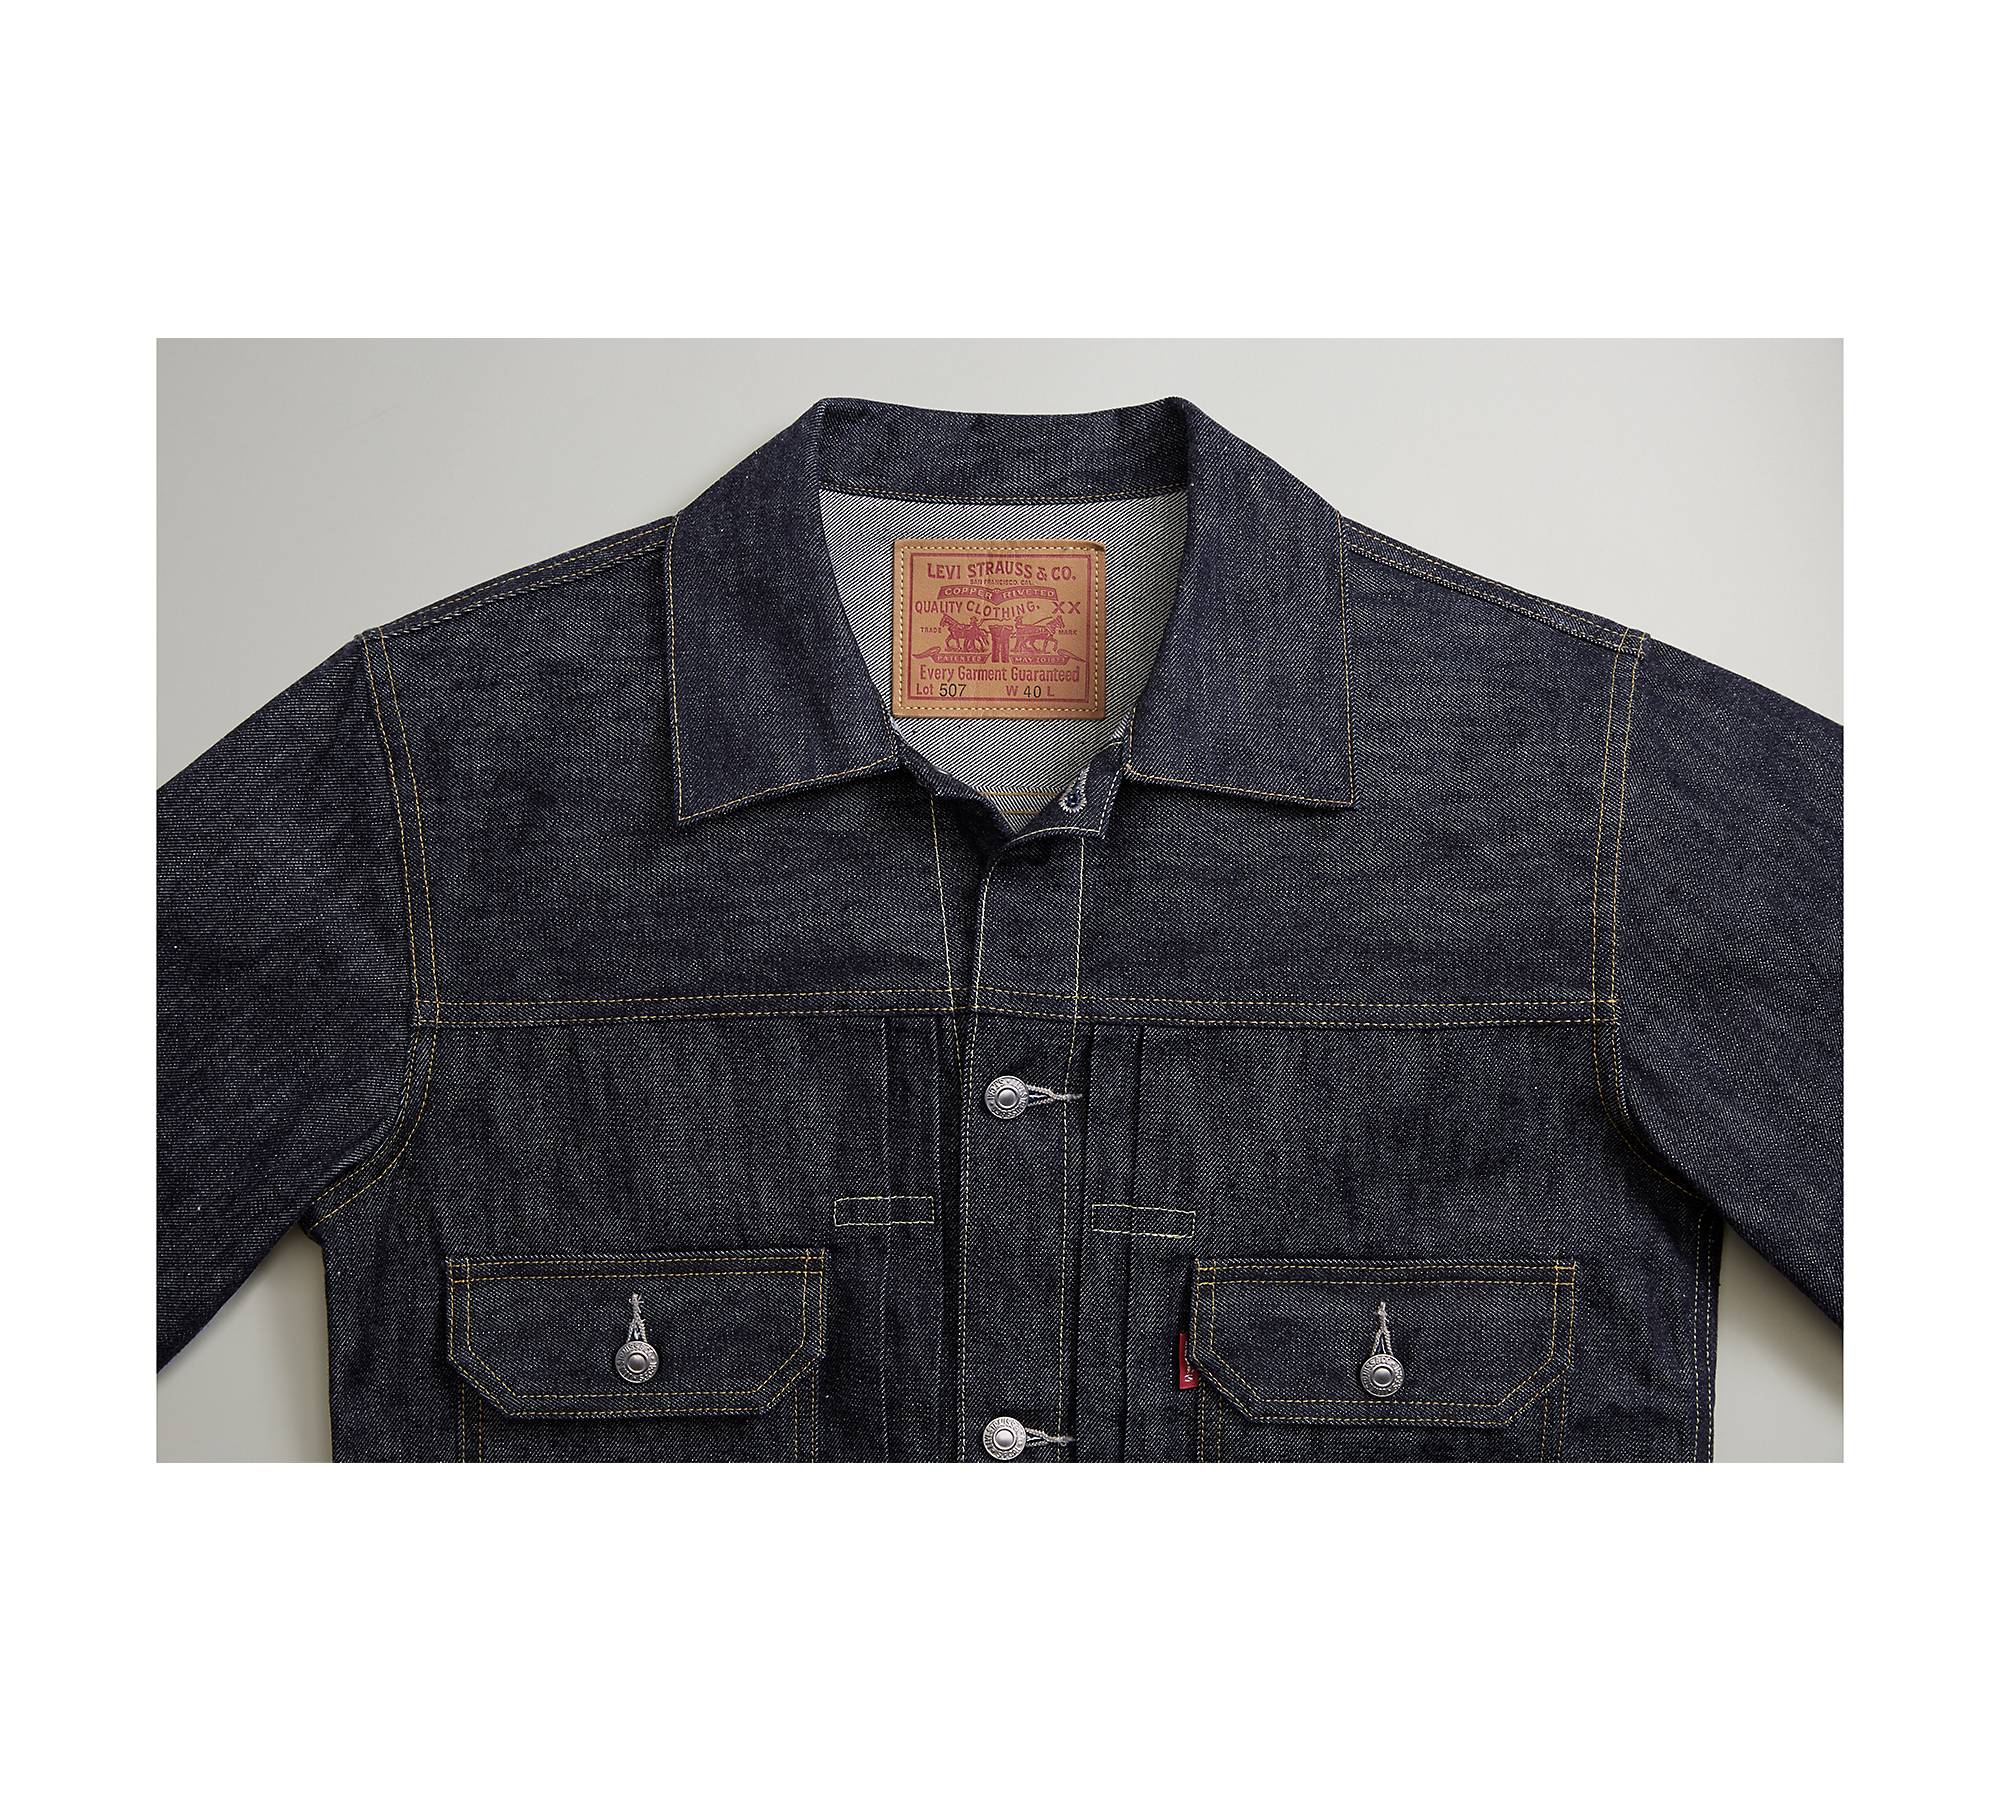 Vintage Levi's Type 2 Denim Jacket at